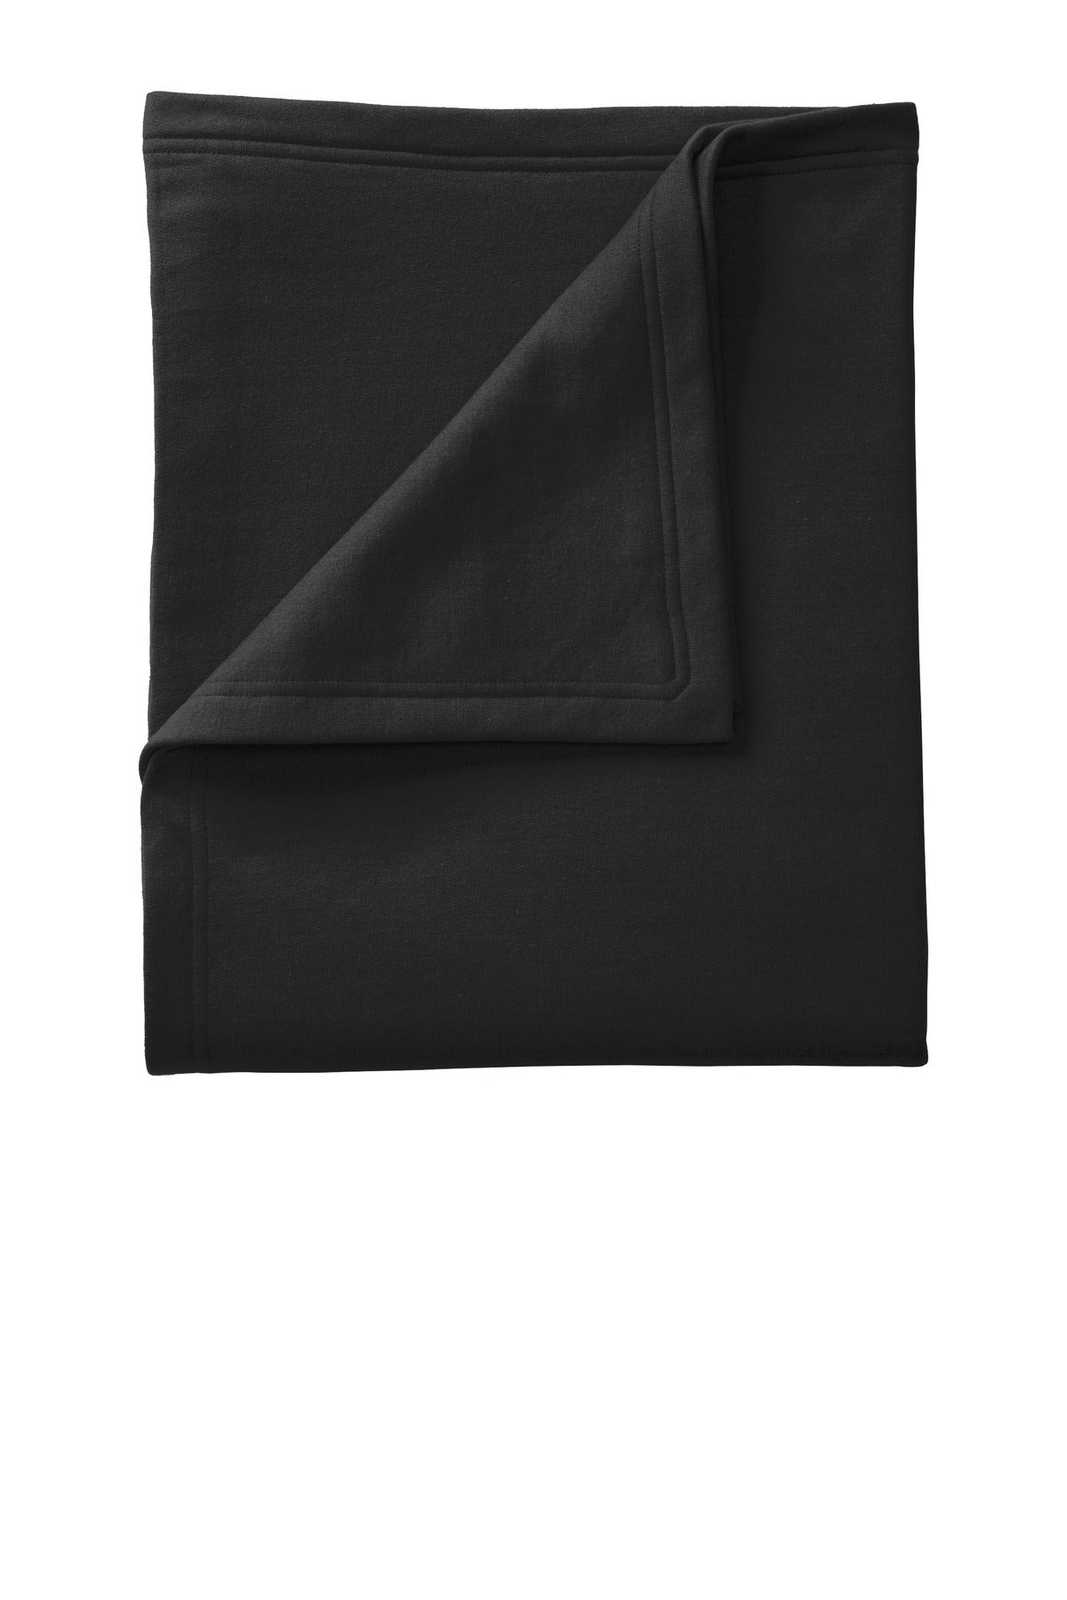 Port &amp; Company BP78 Core Fleece Sweatshirt Blanket - Jet Black - HIT a Double - 1